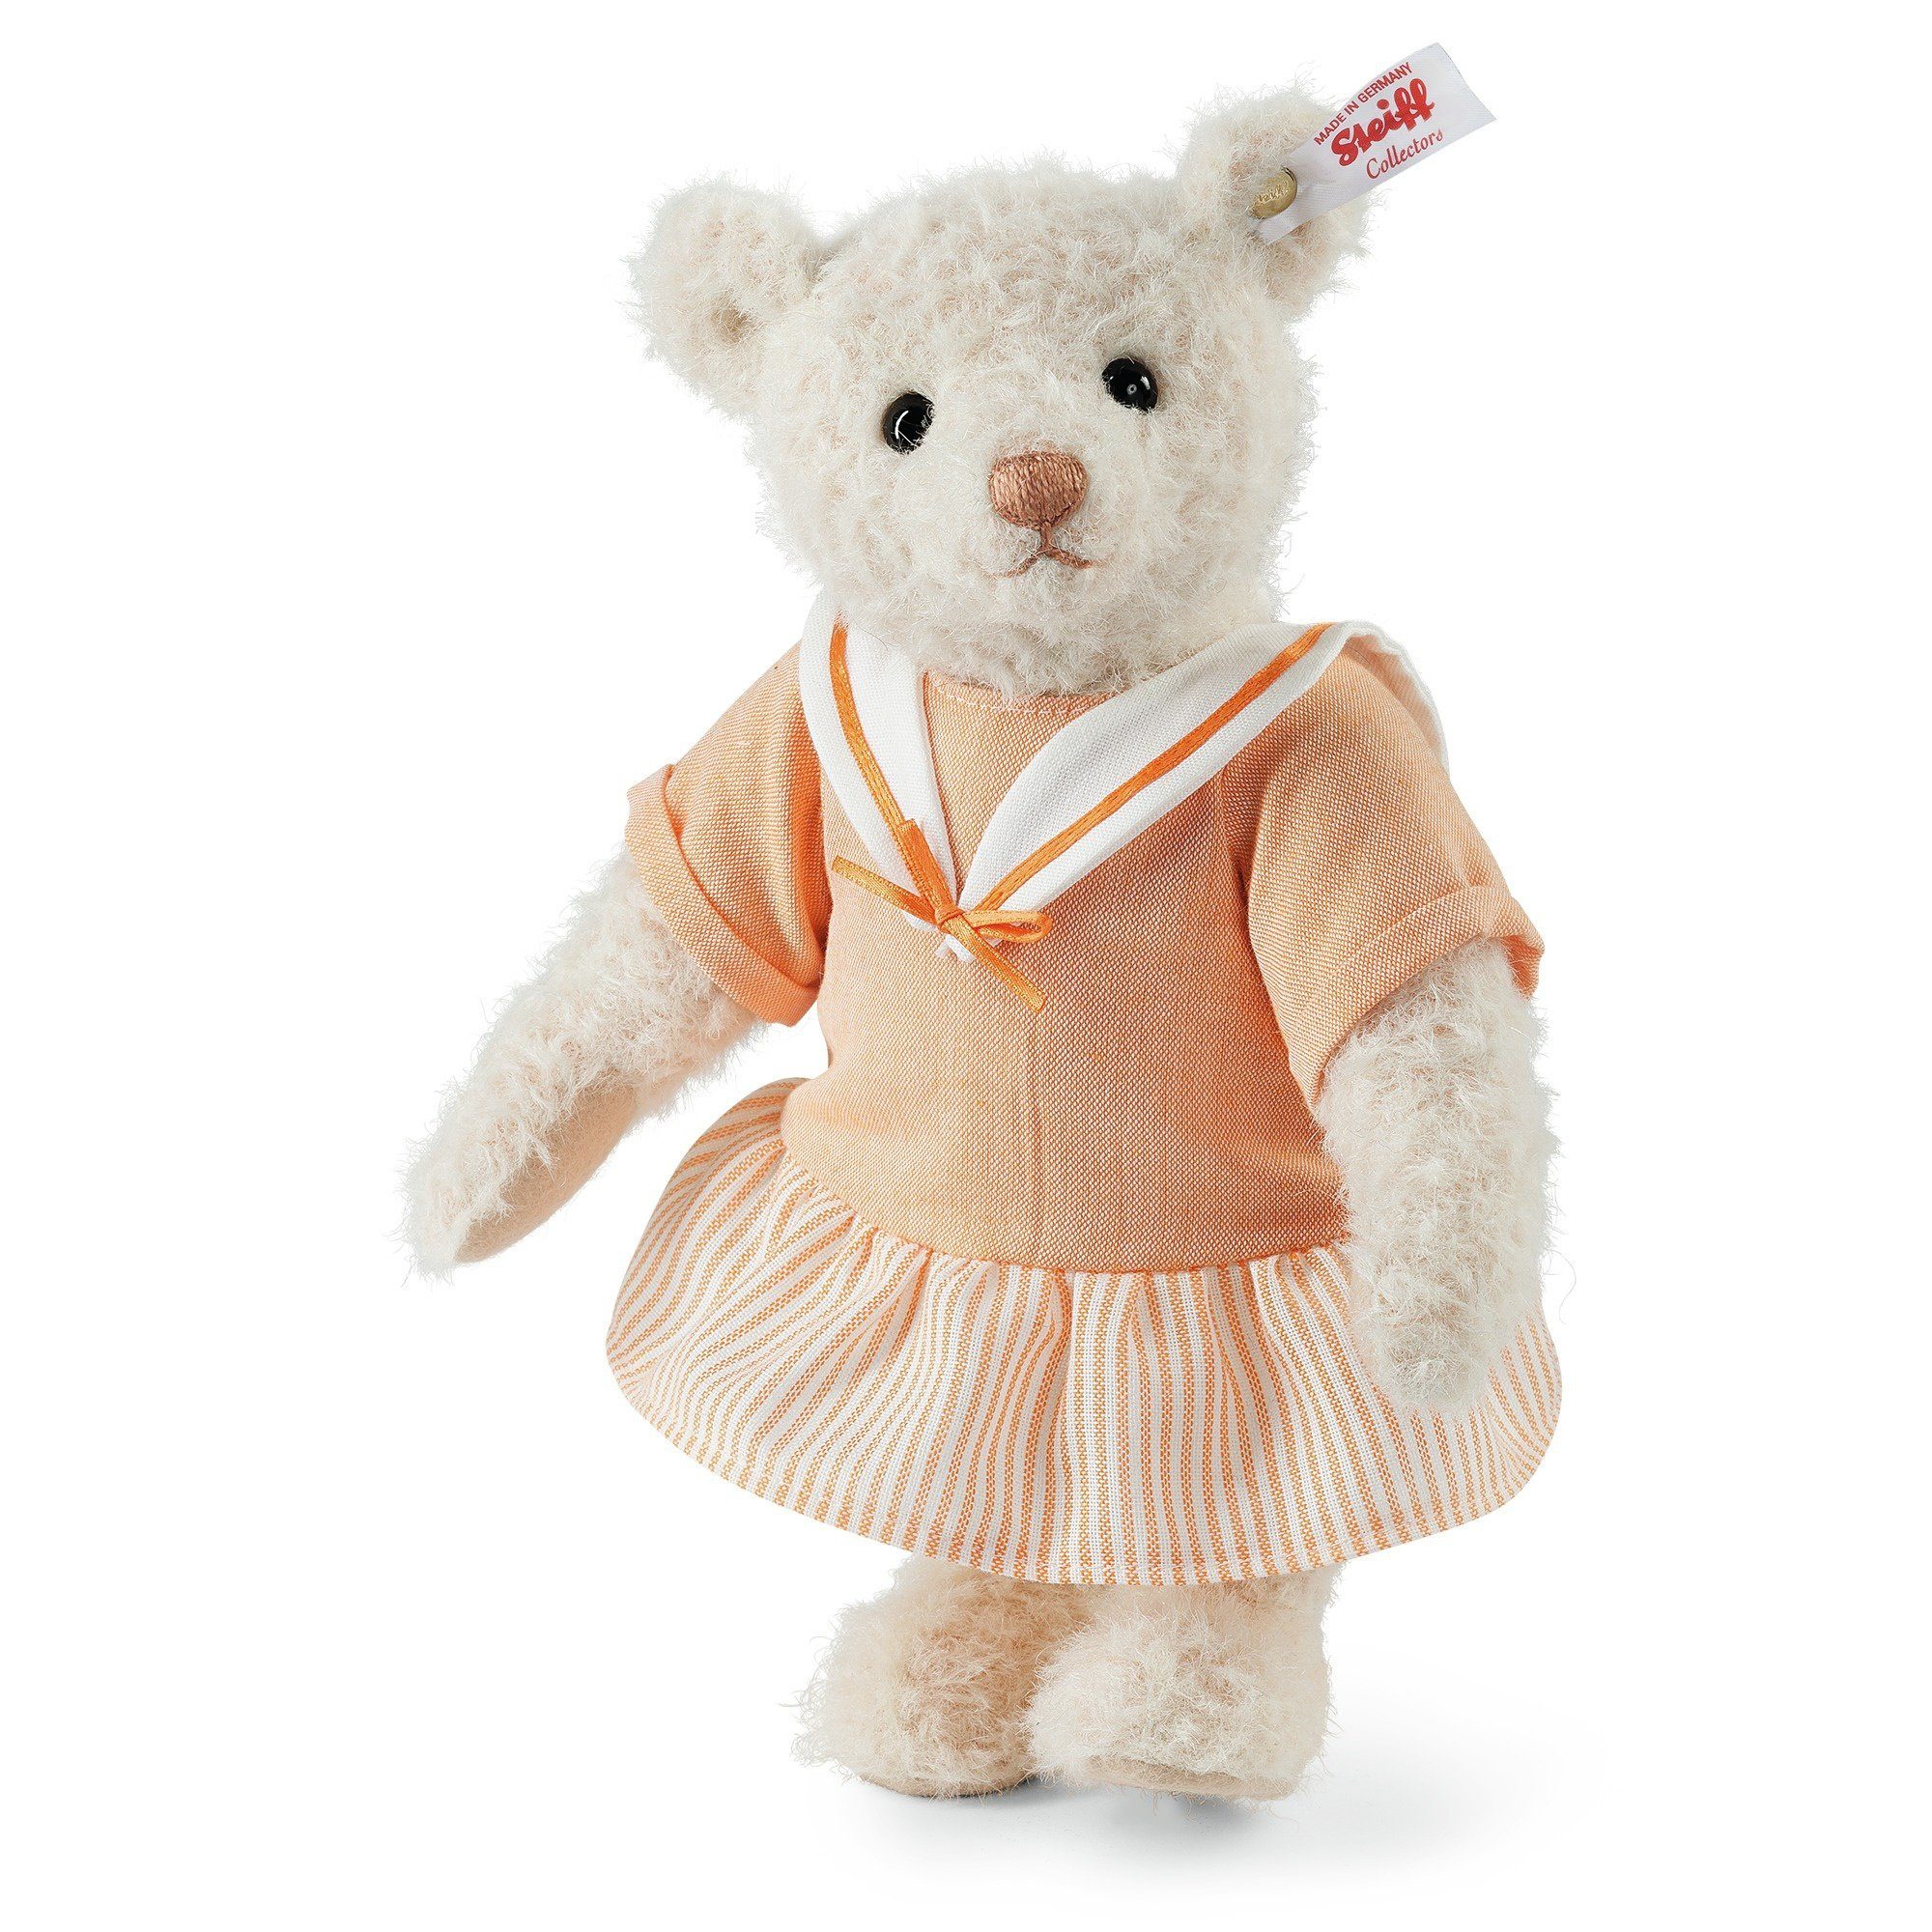 Steiff Dekofigur Teddybär Edith mit 0150239 Steiffbär weiß 24 cm orange Kleid